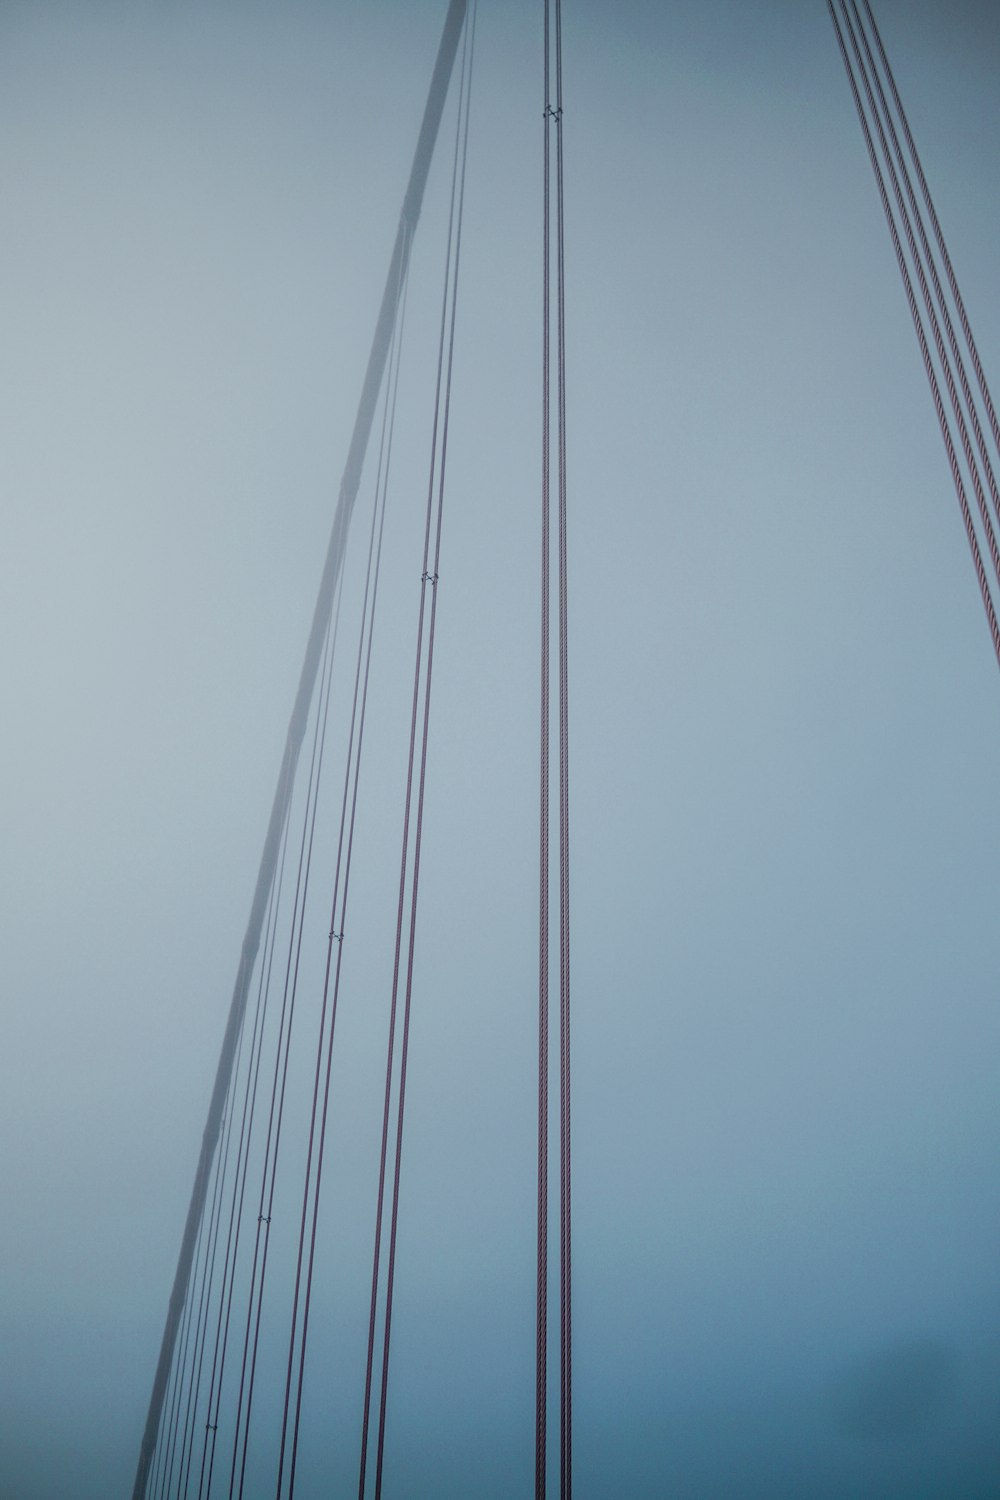 a close up of the golden gate bridge in the fog